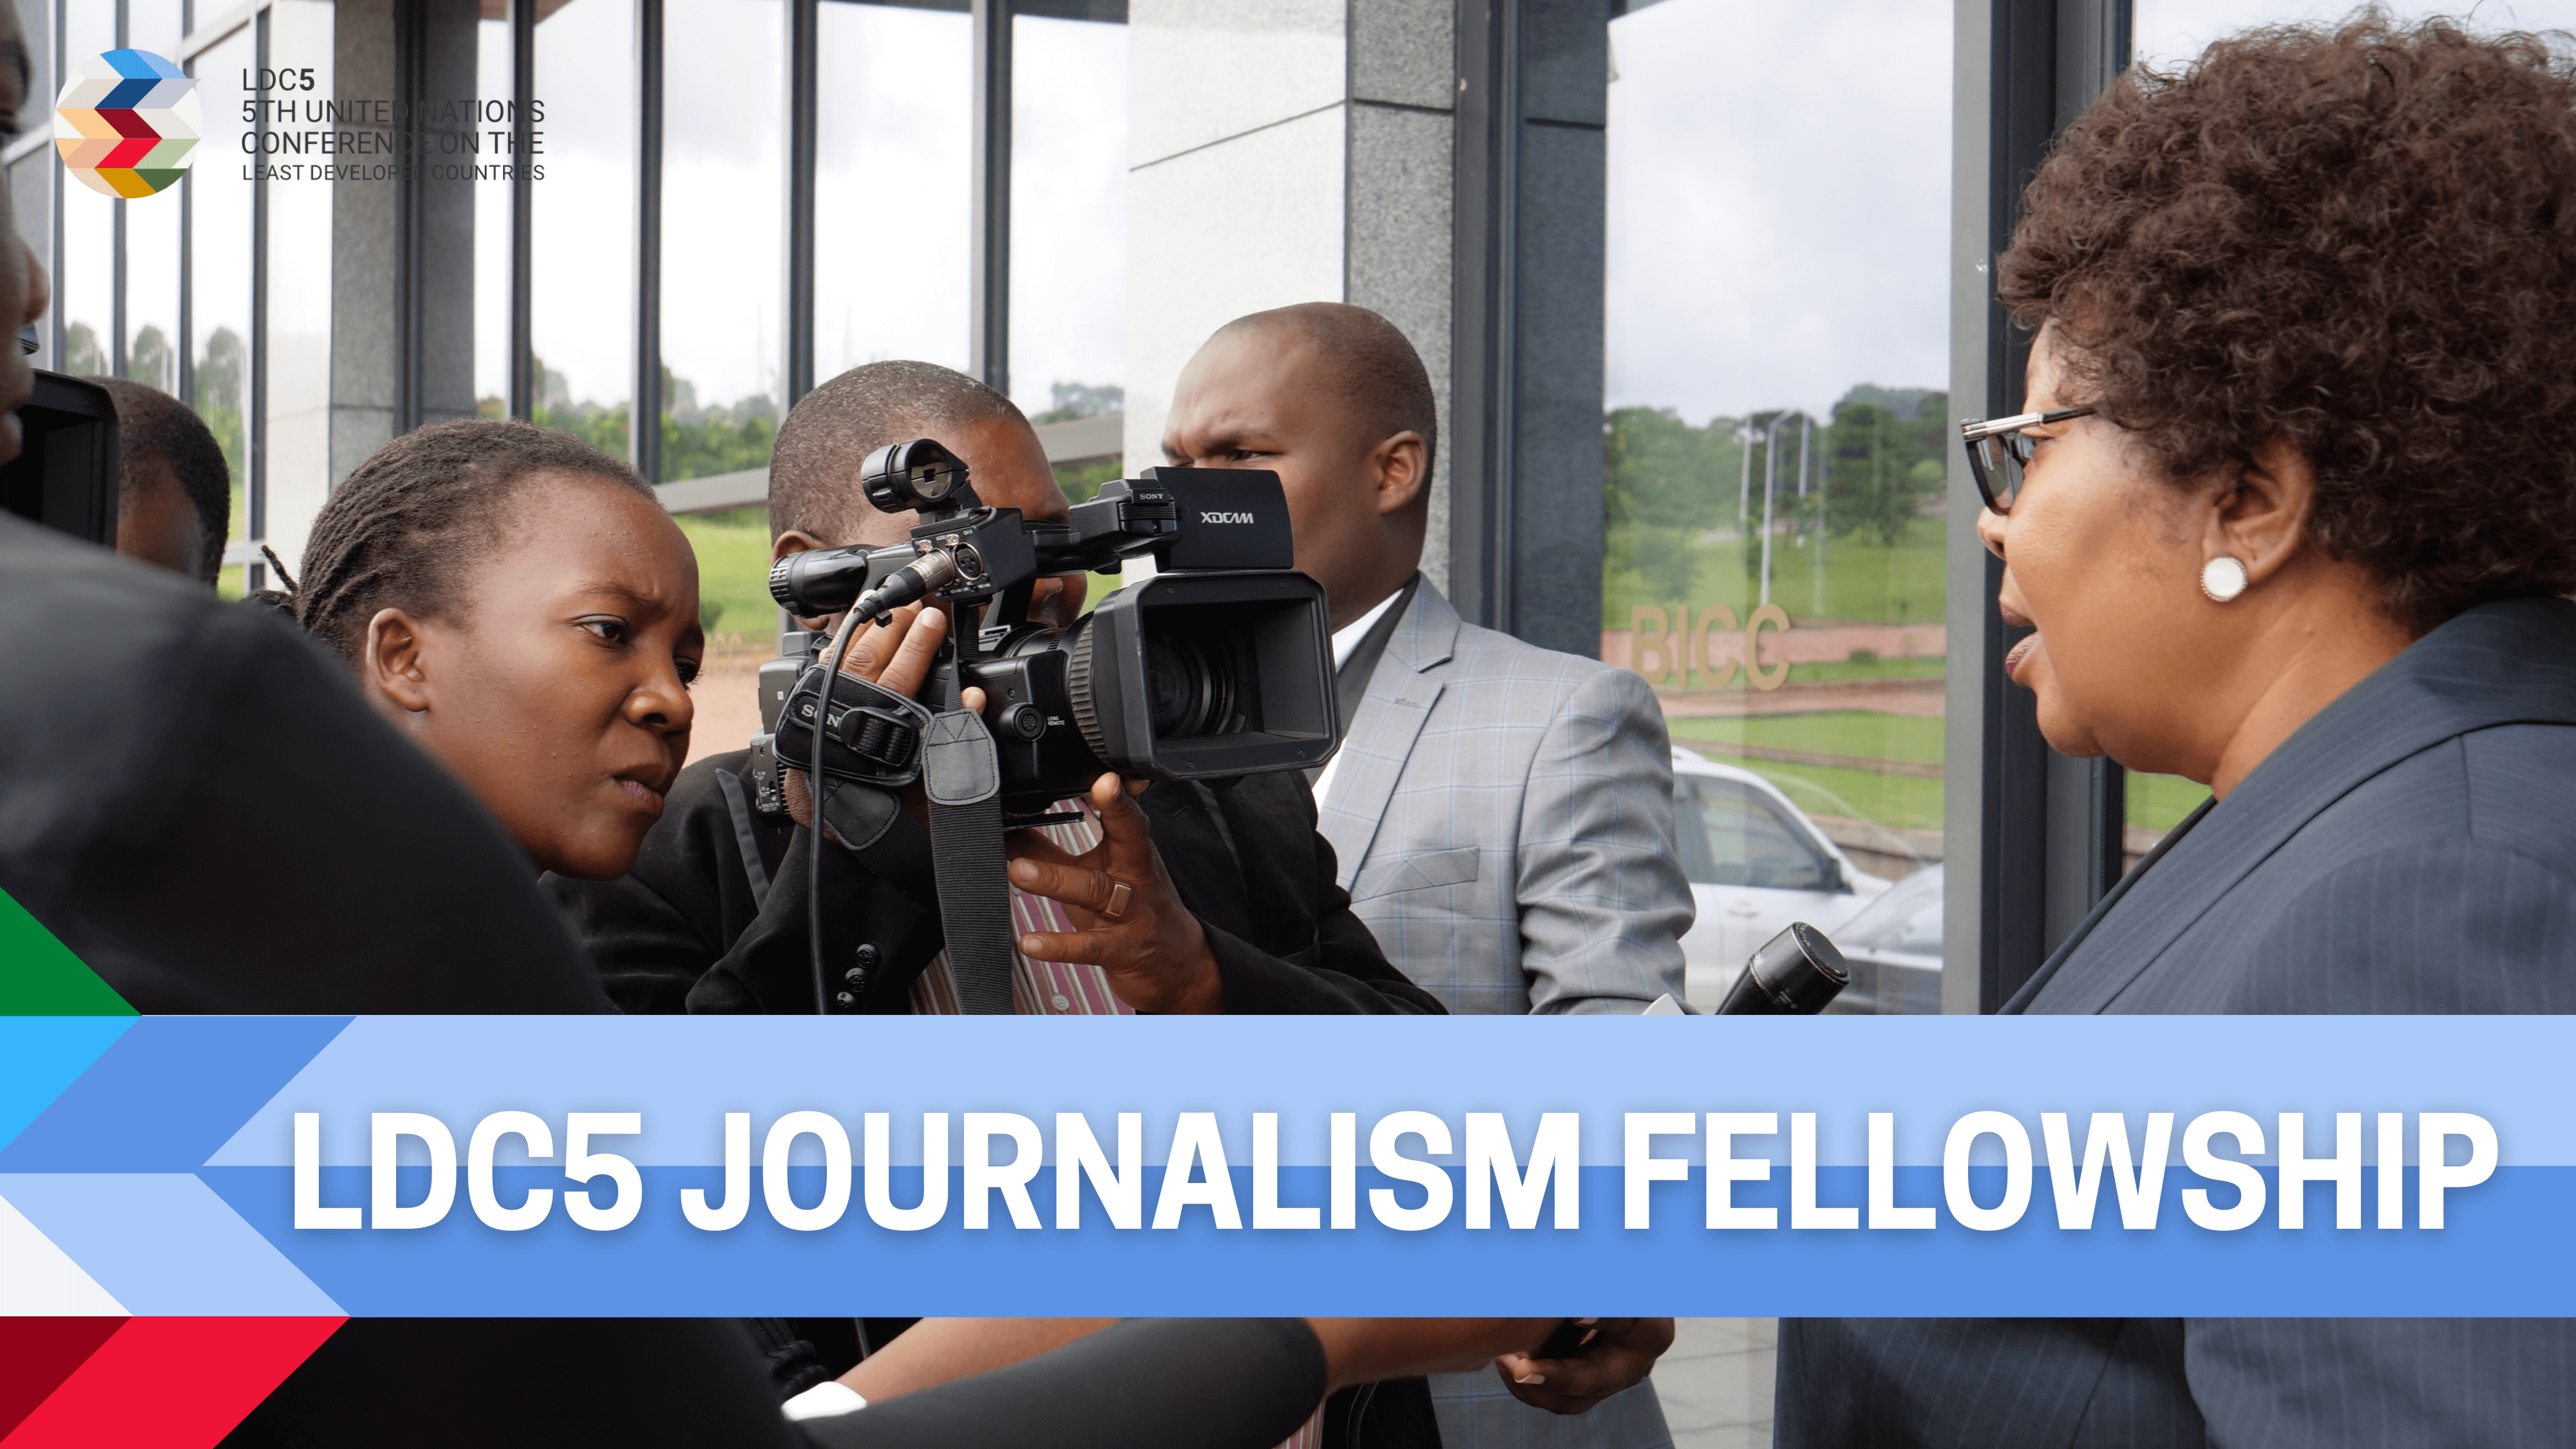 Journalism Fellowship social media card